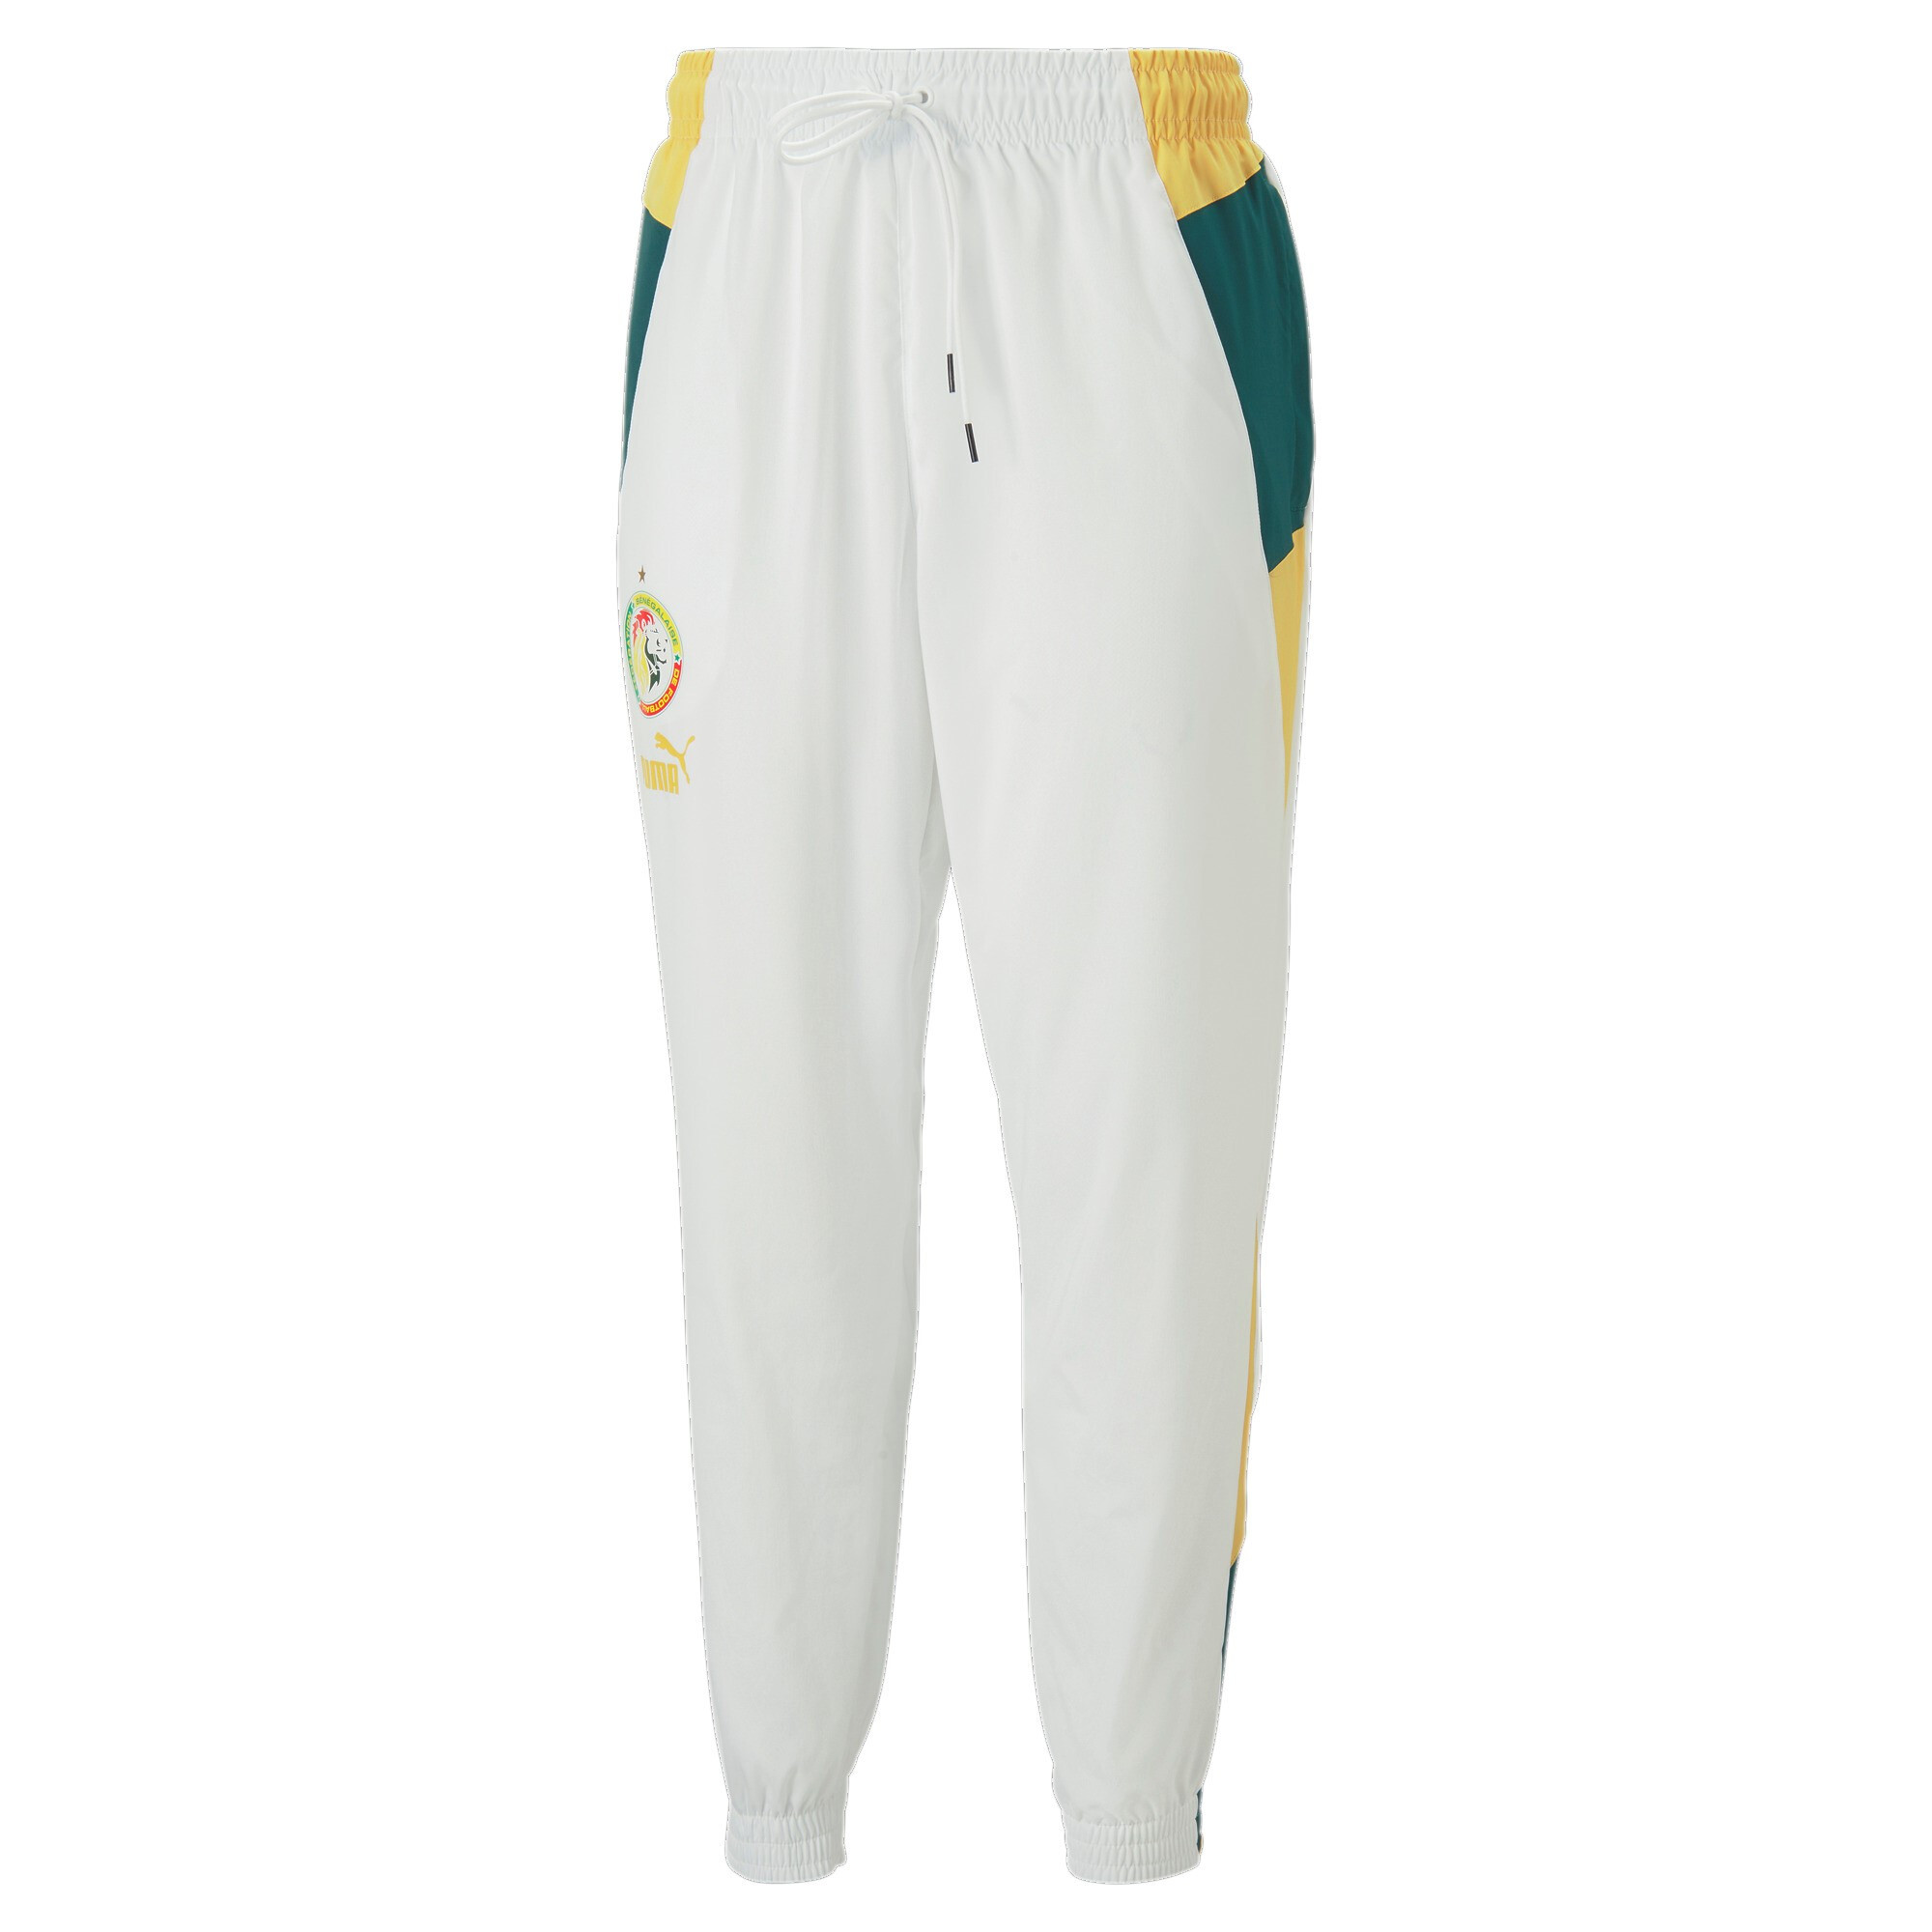 Puma Senegal (FSF) Men's Woven football track pants - White/Mustard